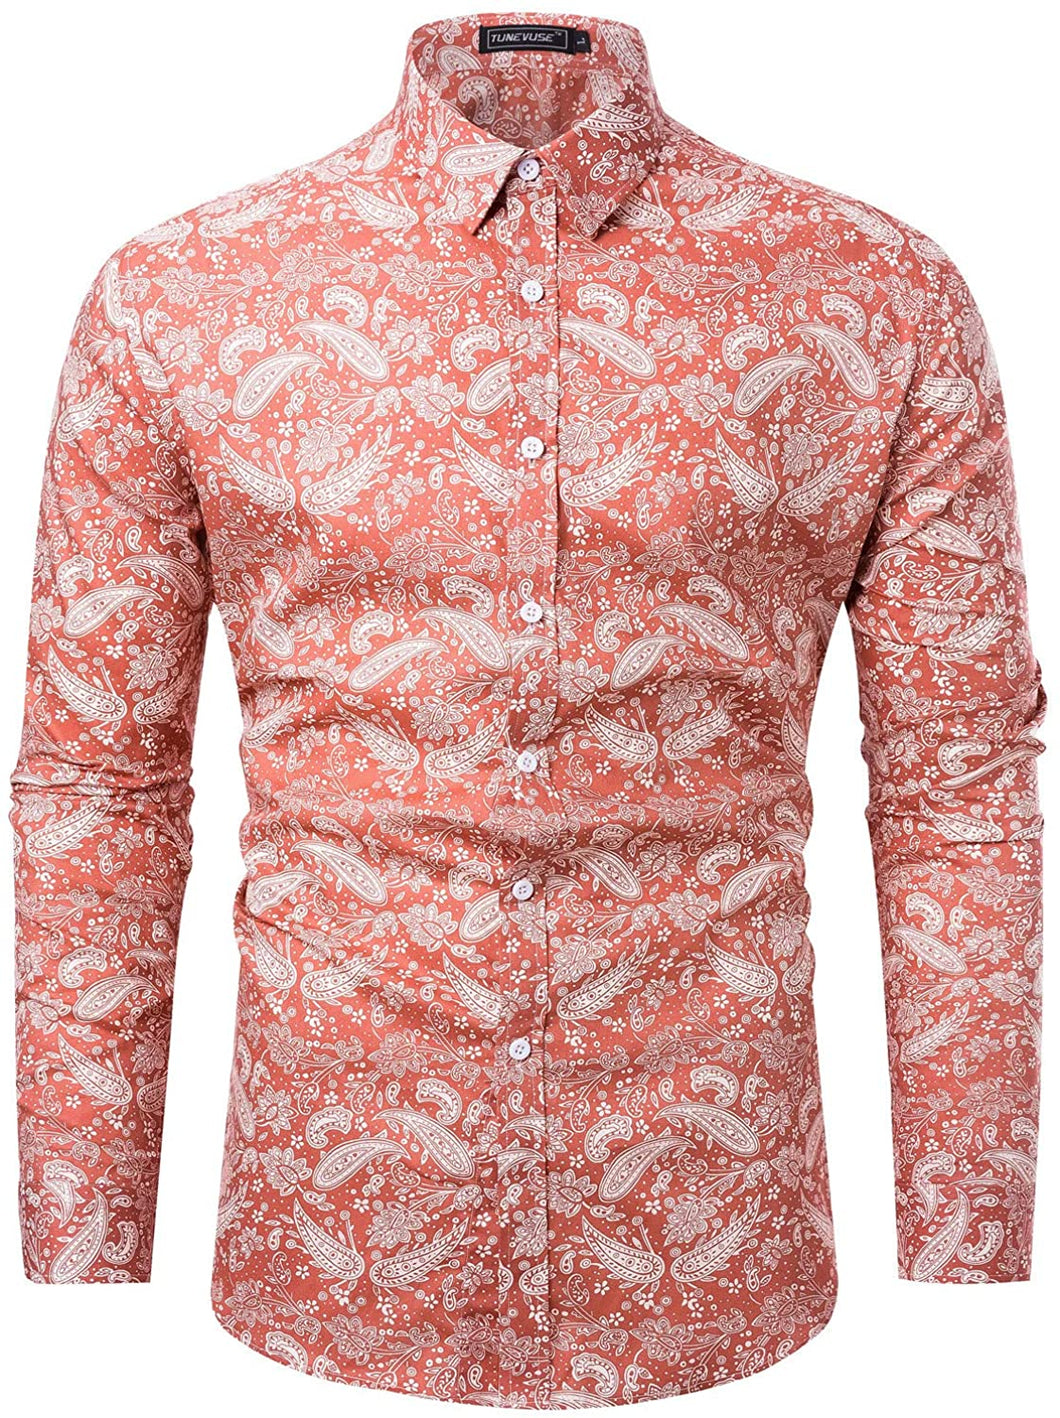 Men's Casual Orange Paisley Long Sleeve Button Up Shirt